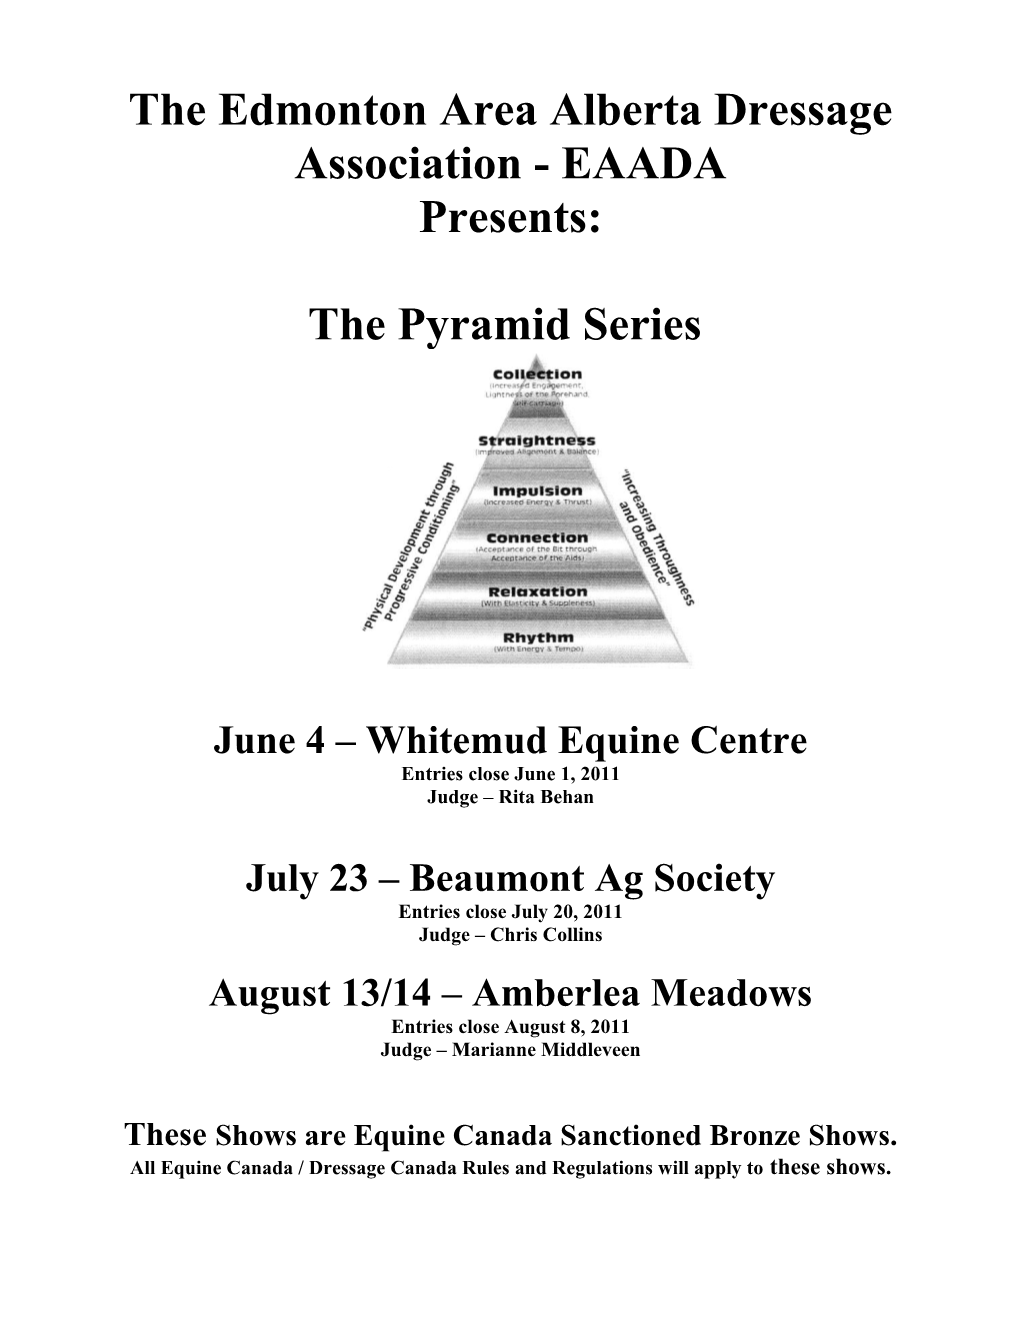 The Edmonton Area Alberta Dressage Association - EAADA